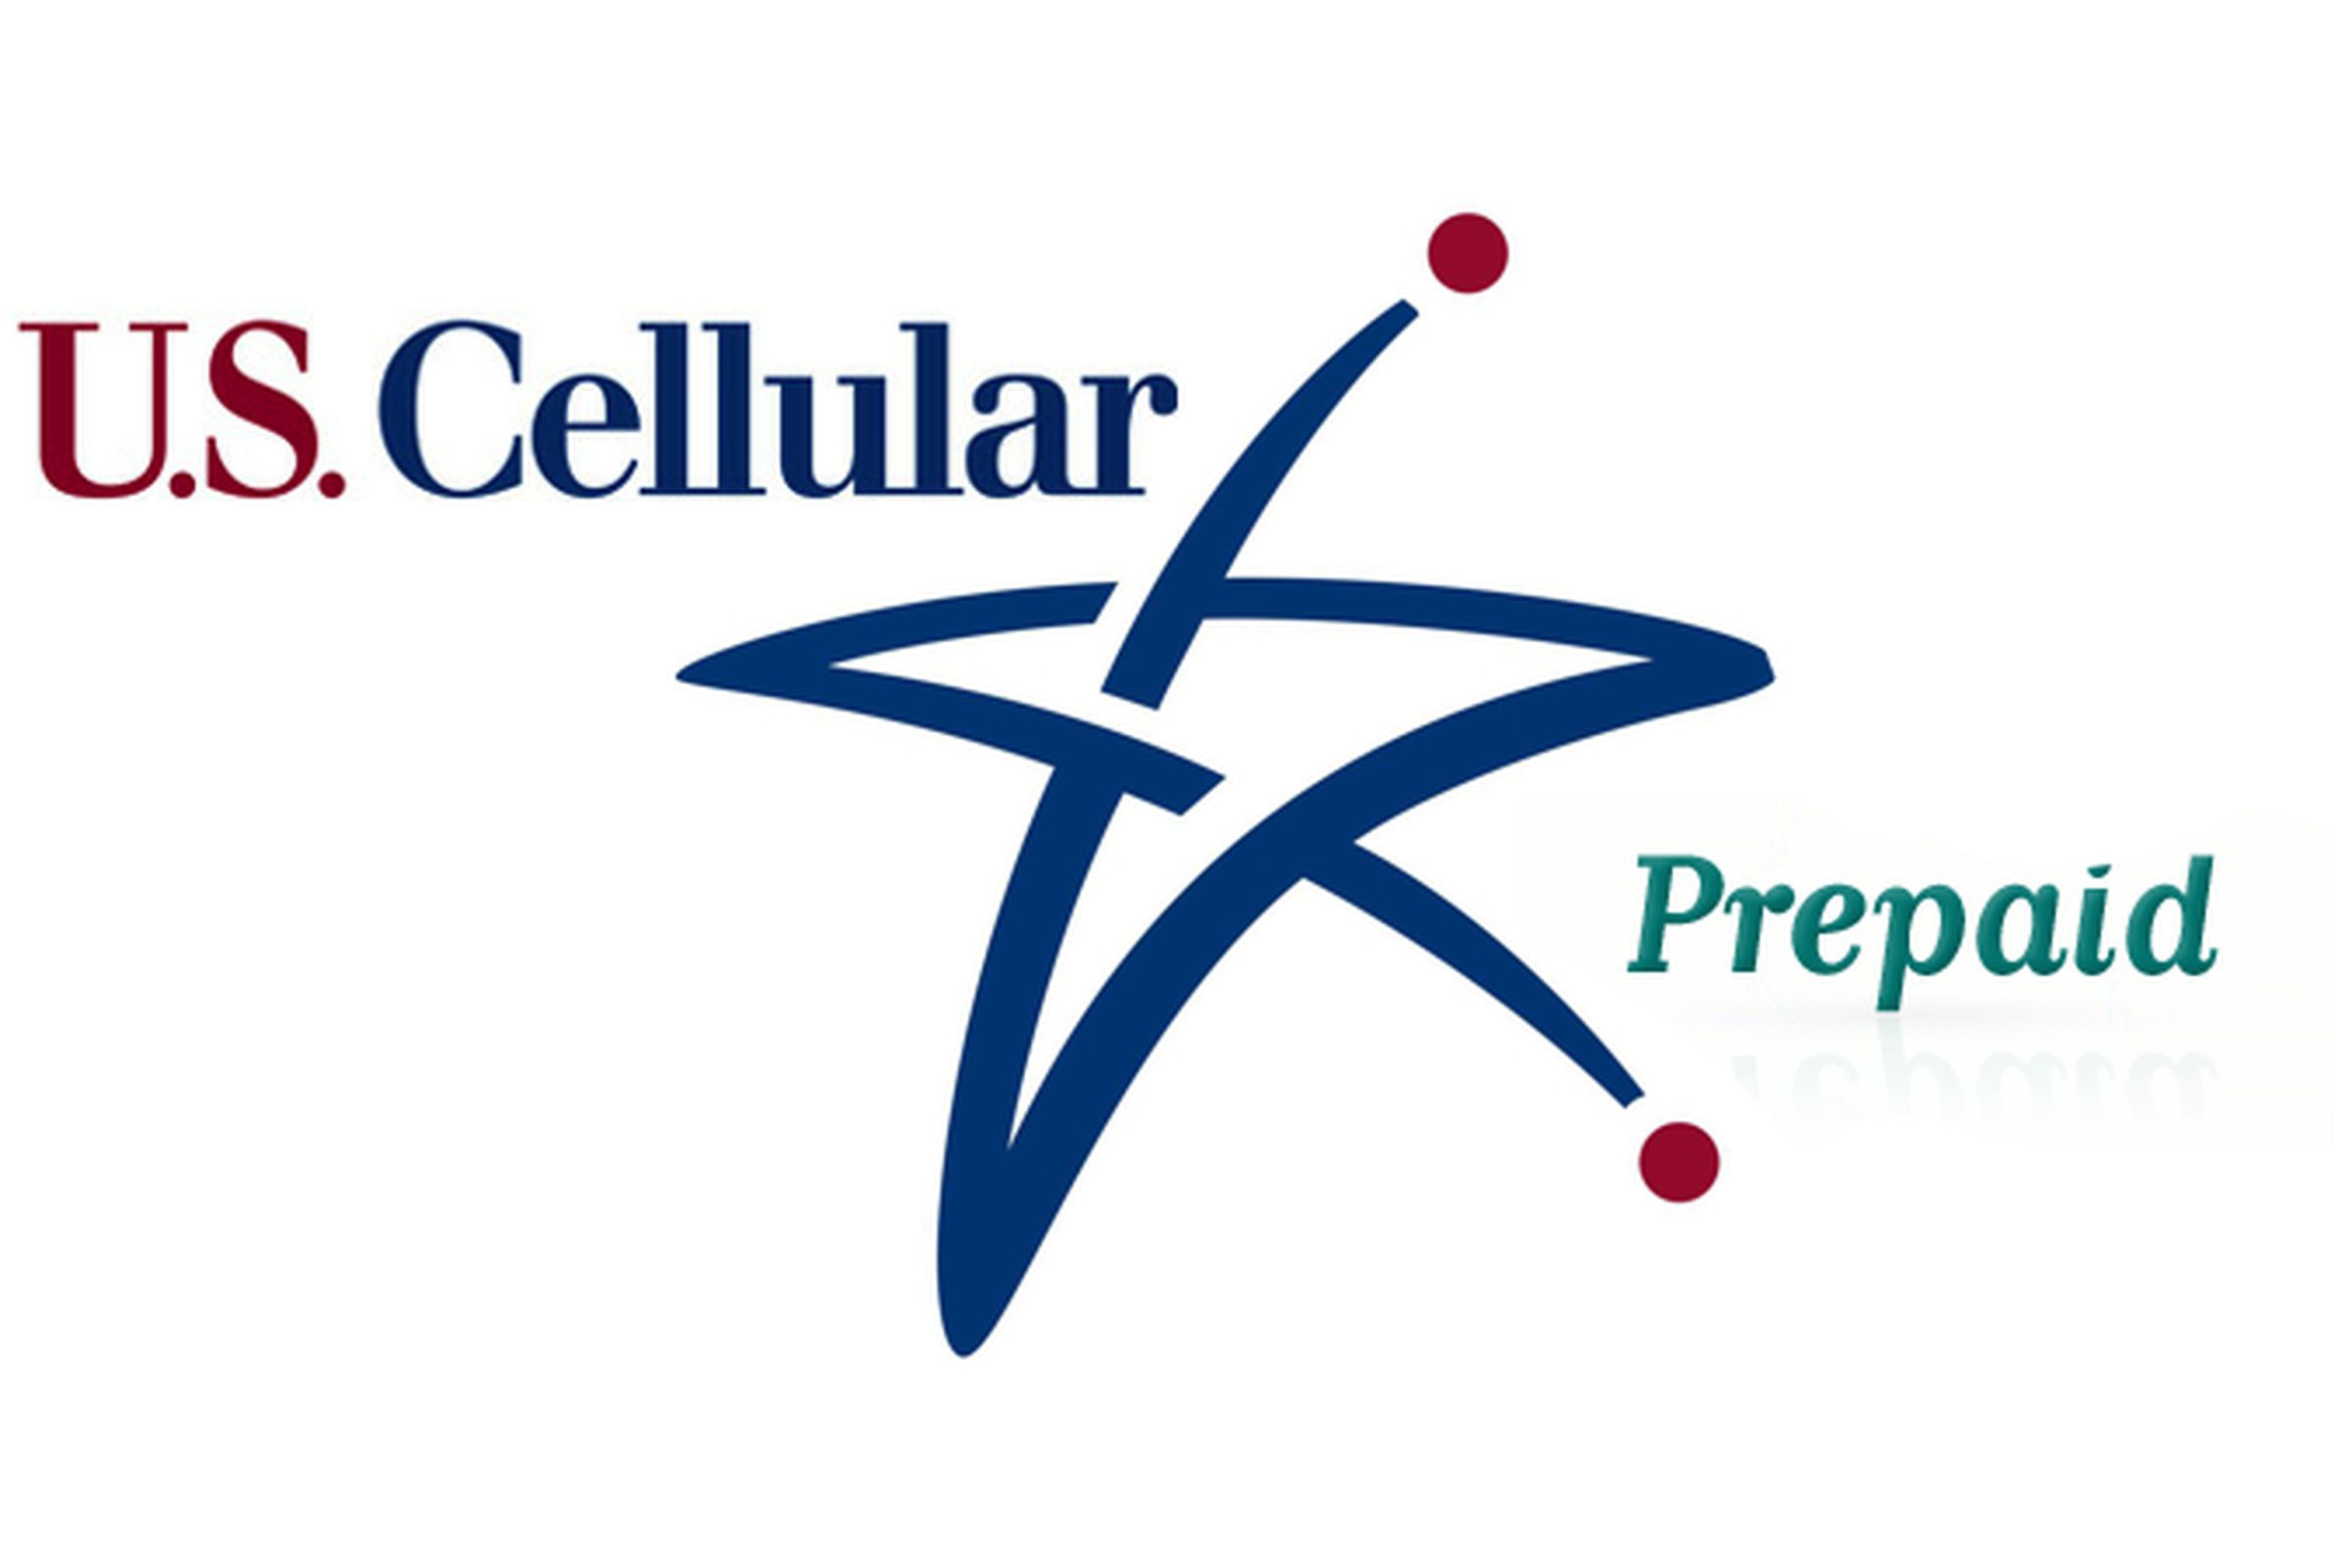 U.S. Cellular Prepaid